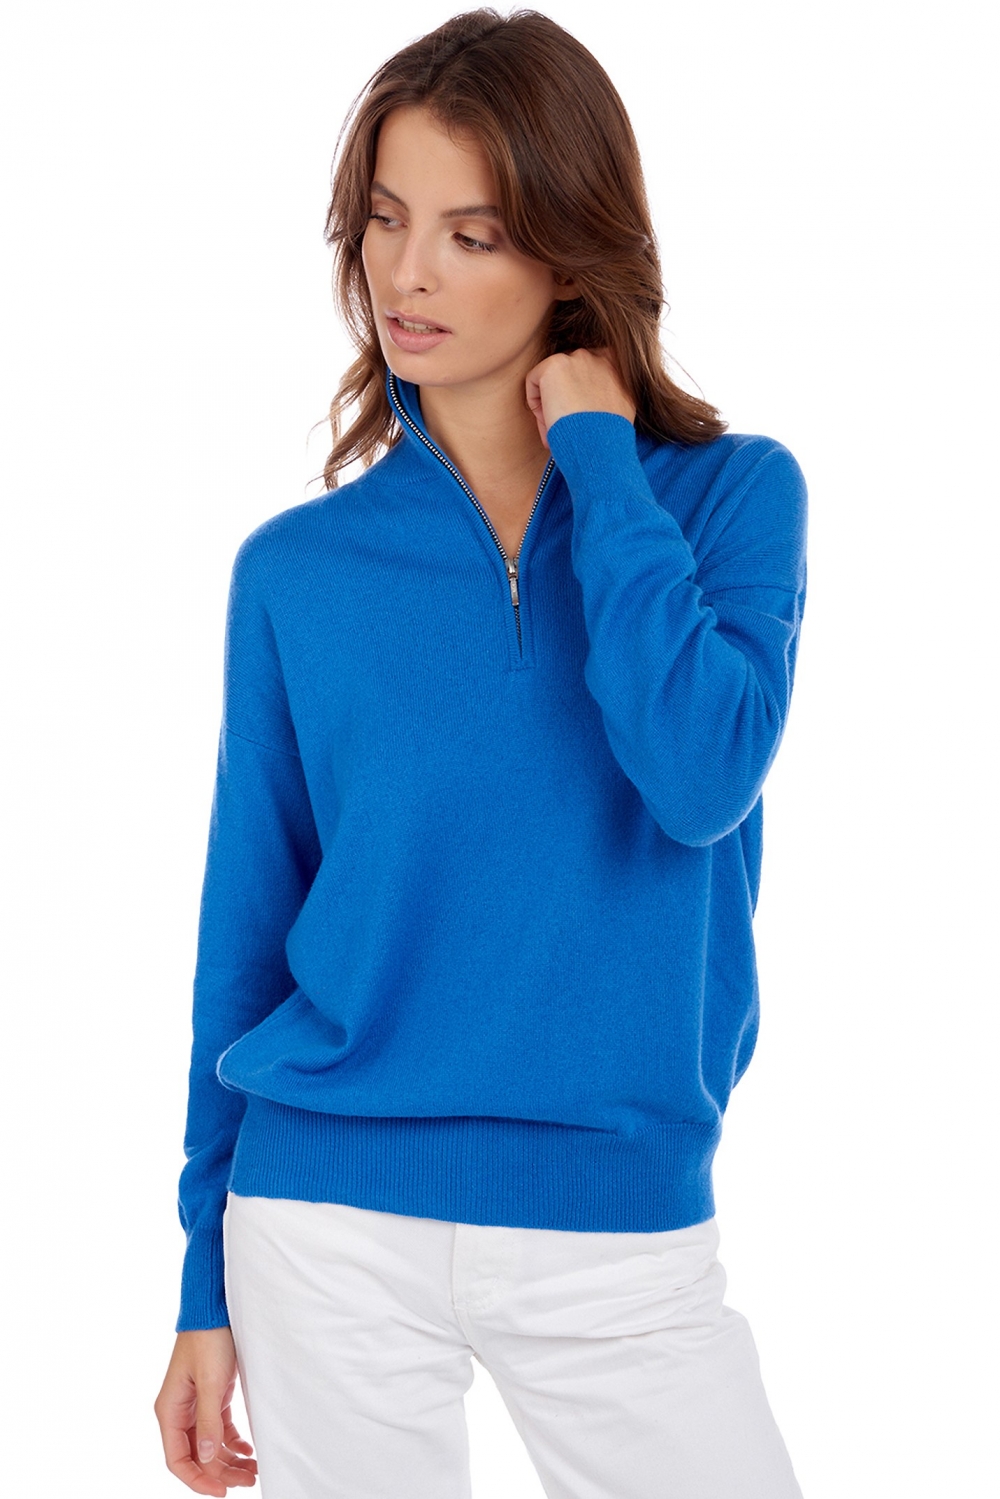 Cashmere ladies our full range of women s sweaters groseille tetbury blue 4xl